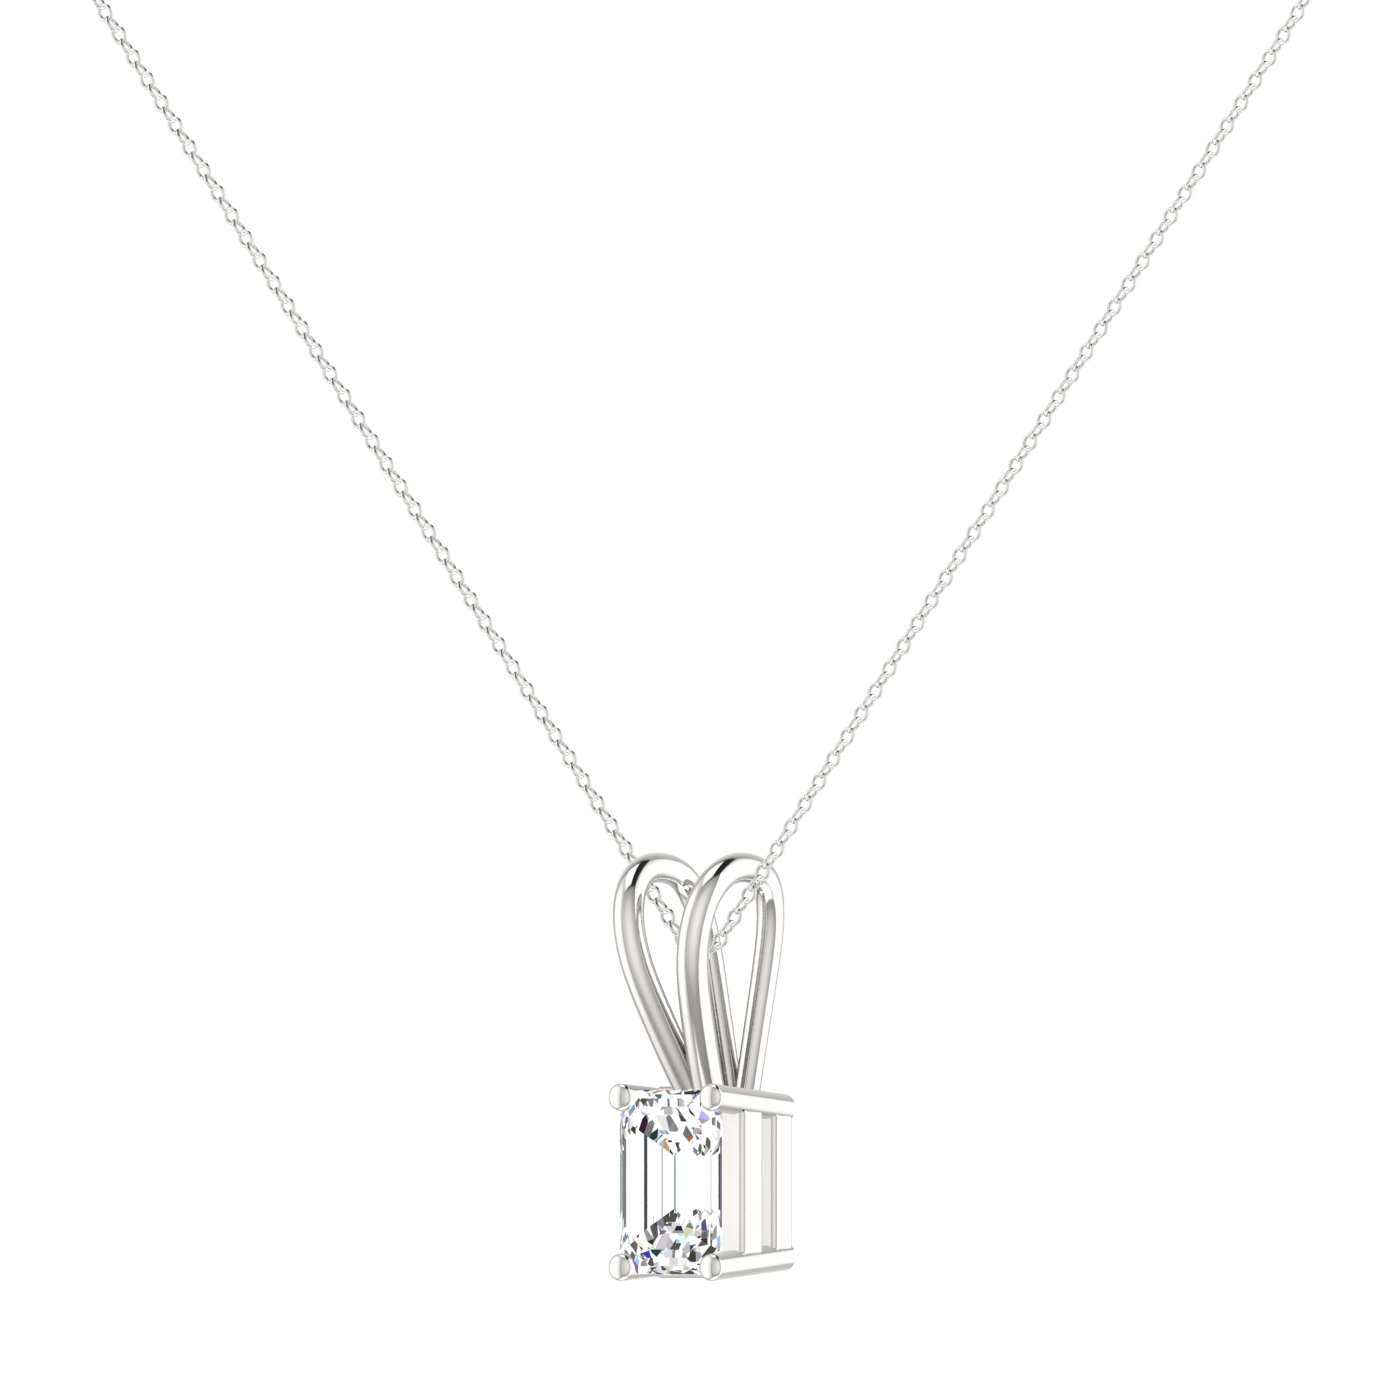 Charm Emerald Cut Diamond Pendant 100% Real 925 Sterling Silver Chocker  Wedding Pendants Necklace For Women Engagement Jewelry - Pendants -  AliExpress